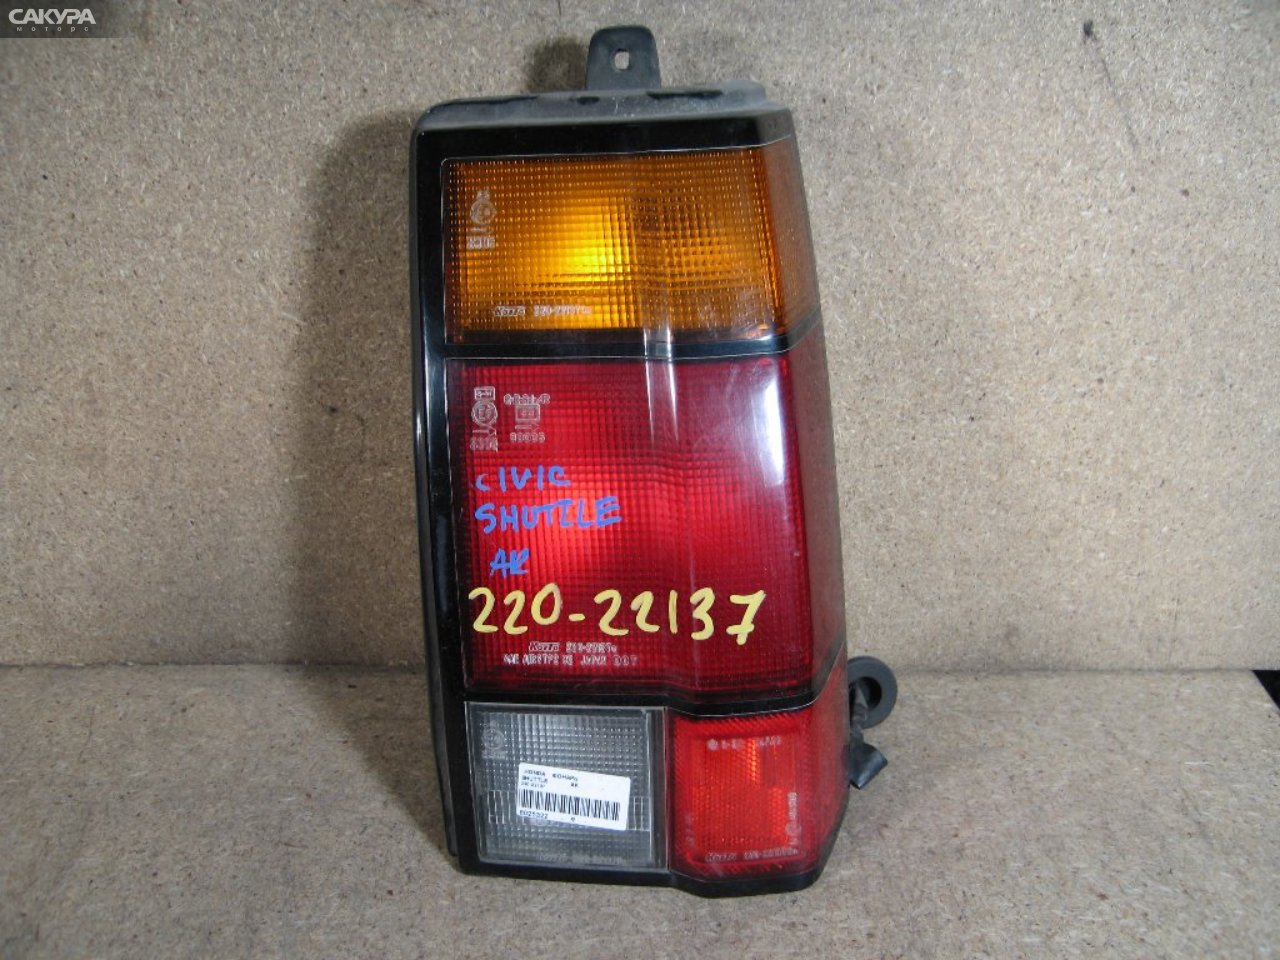 Фонарь стоп-сигнала правый Honda Civic Shuttle AK 220-22137: купить в Сакура Абакан.